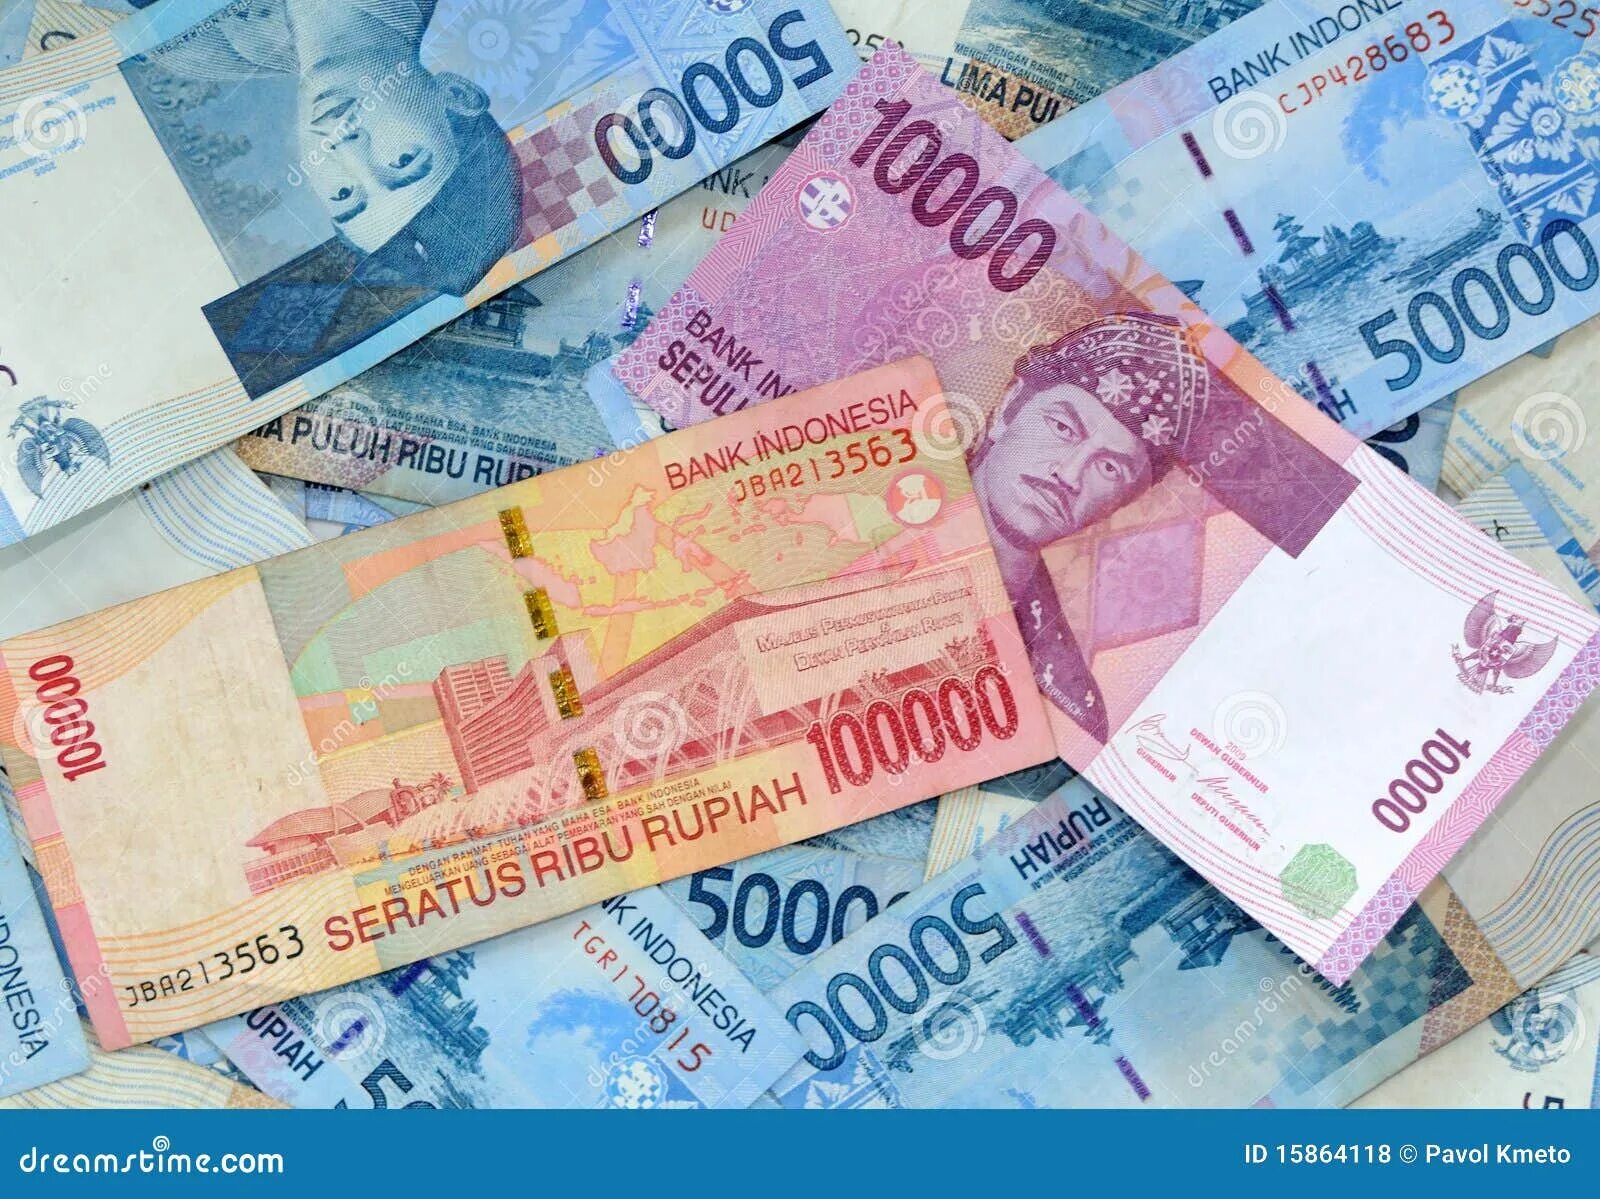 Рупий бали рубль. Индонезийская рупия. Индонезийская валюта. Балийские рупии. Индонезийская рупия (IDR).